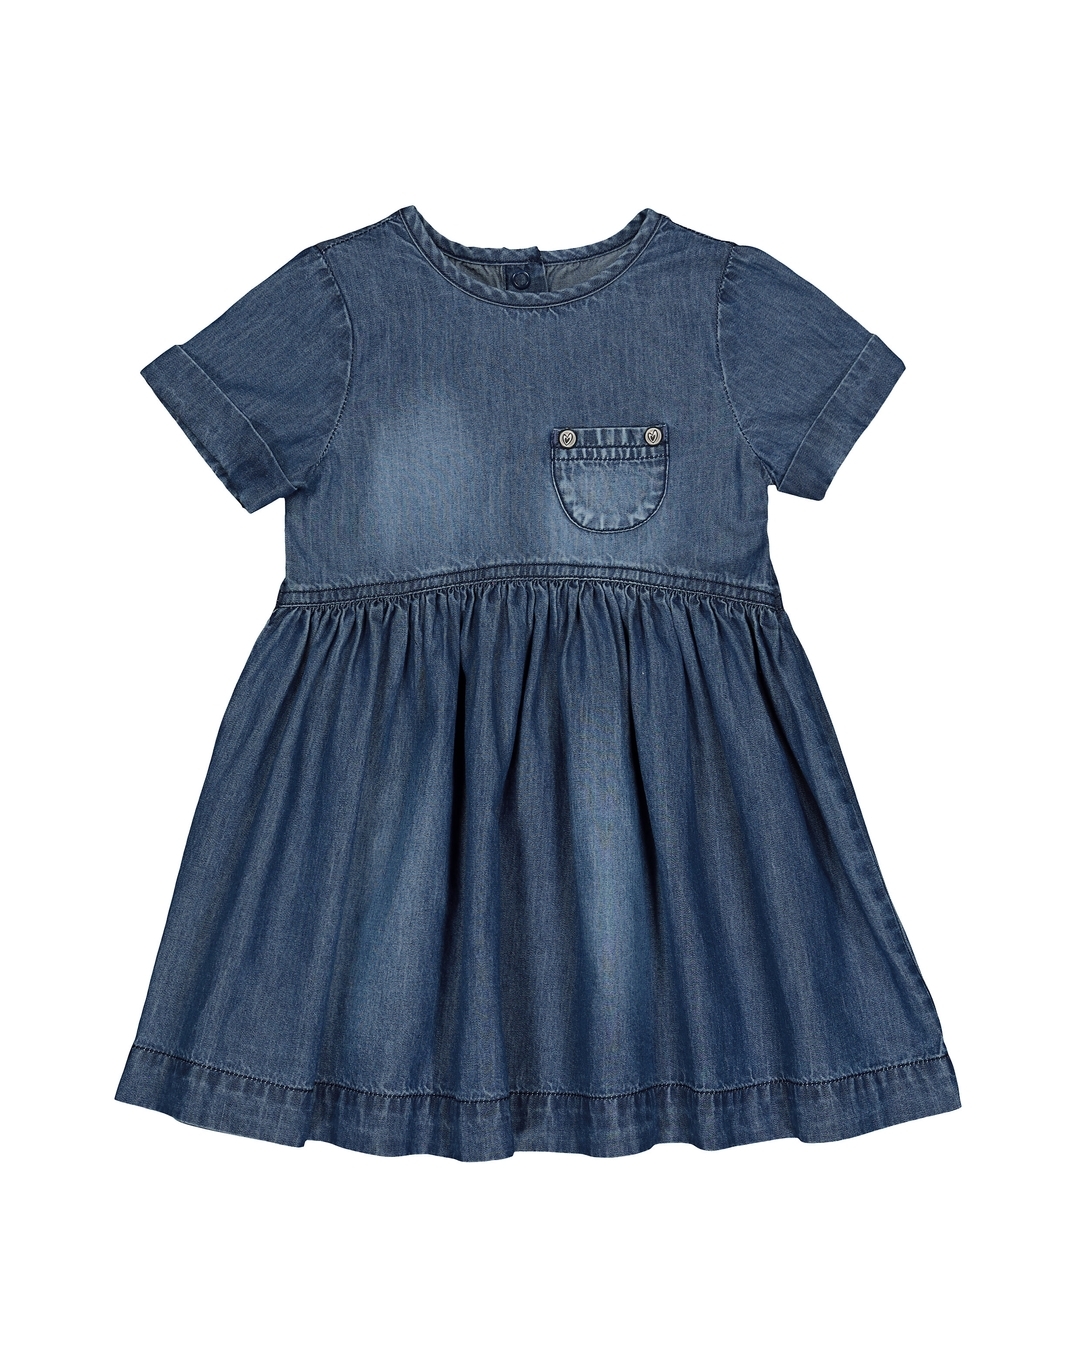 Buy ASTRIB Cute Baby Girl's Denim Frock Dress (Golden, 12-18 Months) at  Amazon.in